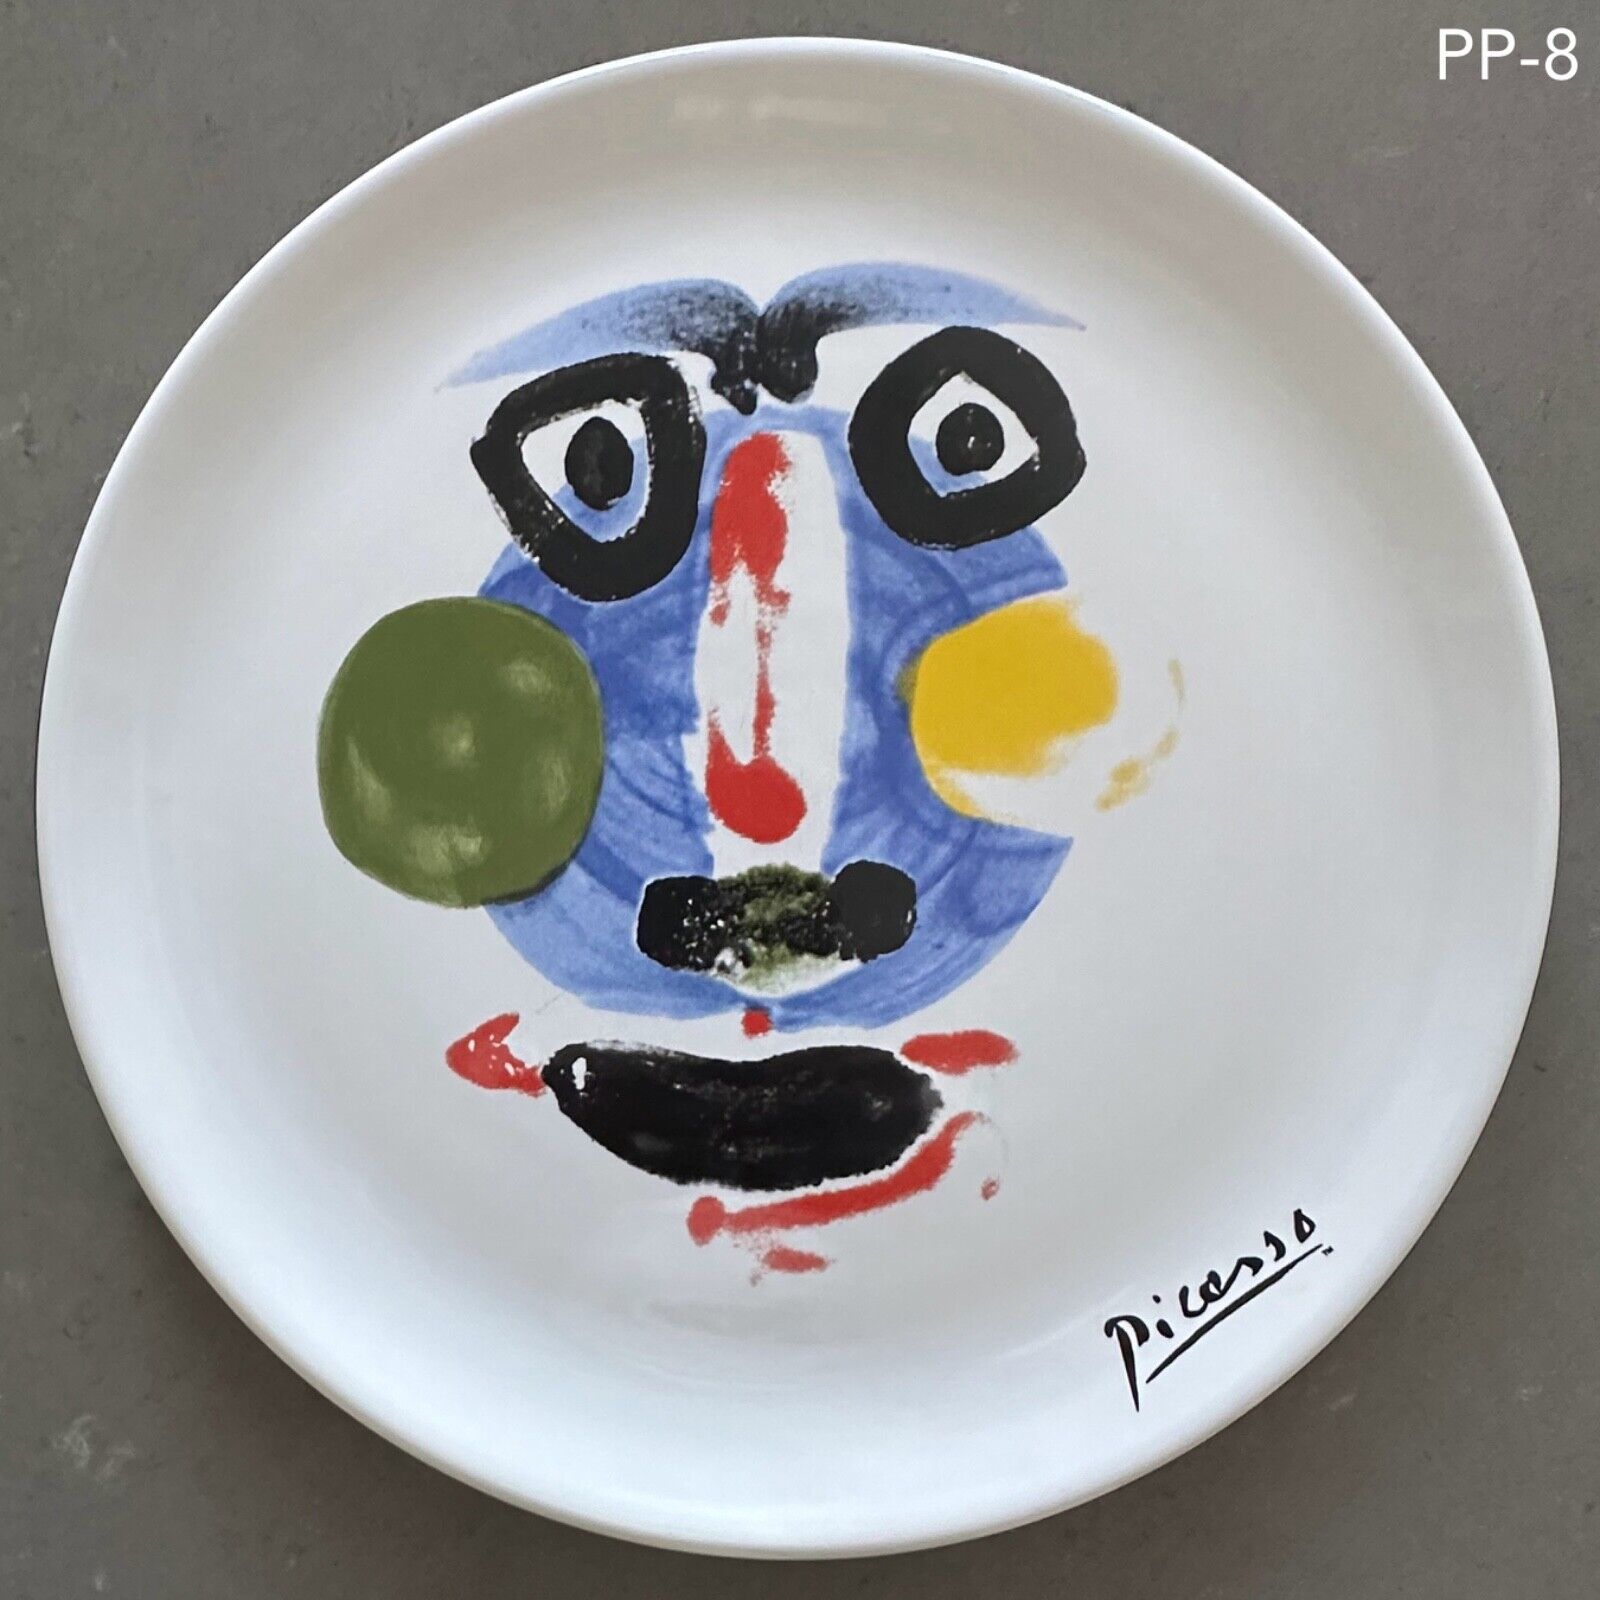 Pablo Picasso Ceramic Plate PP-8 Rare Face 1963 Masterpiece Edition